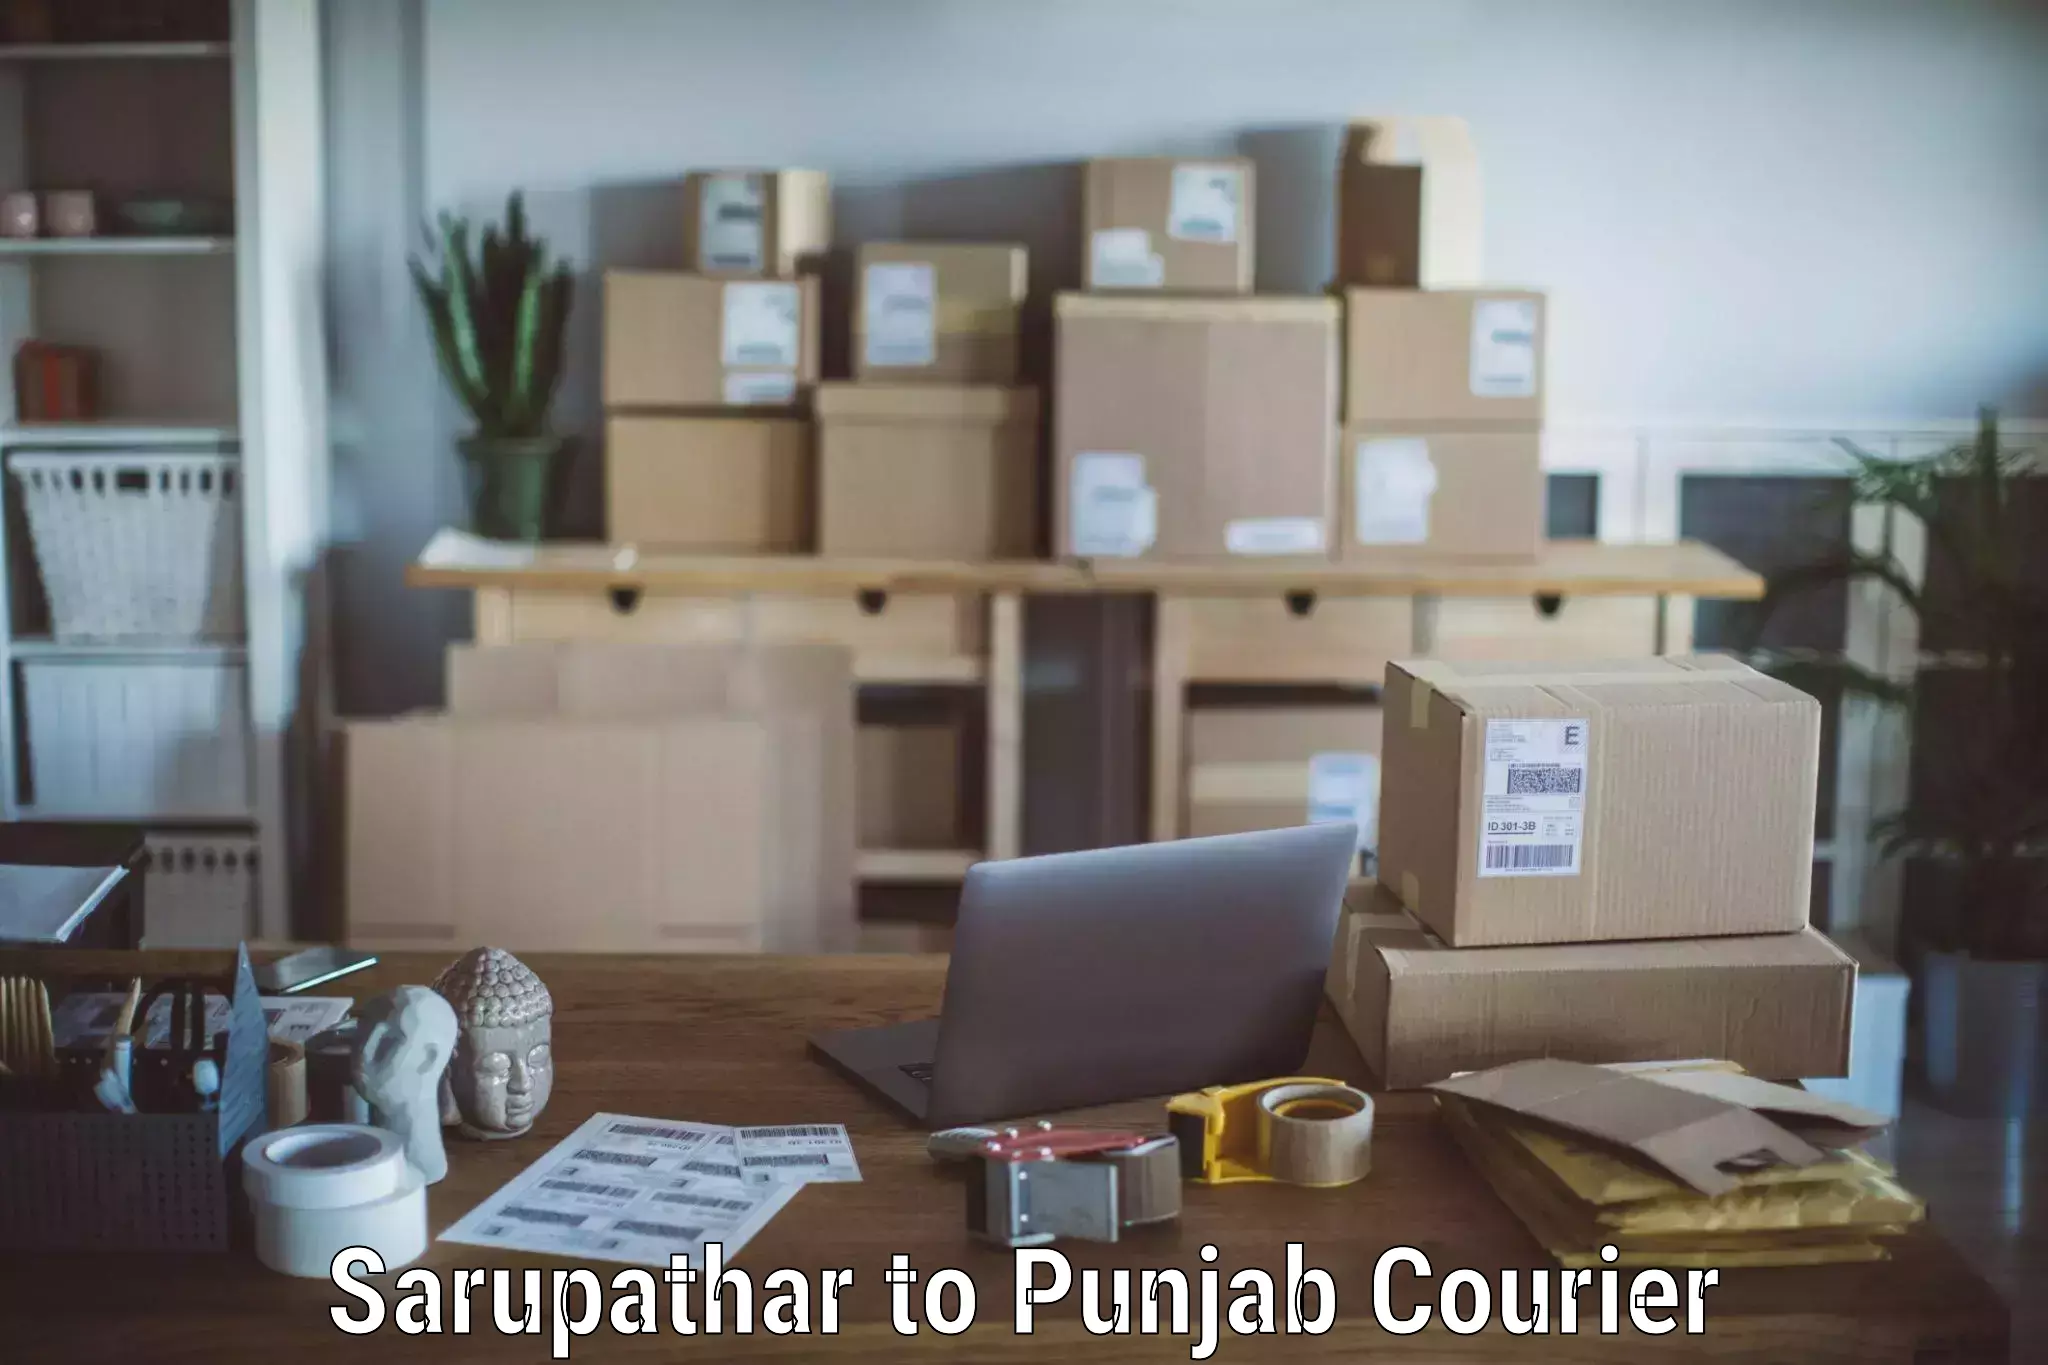 Professional moving company Sarupathar to Batala